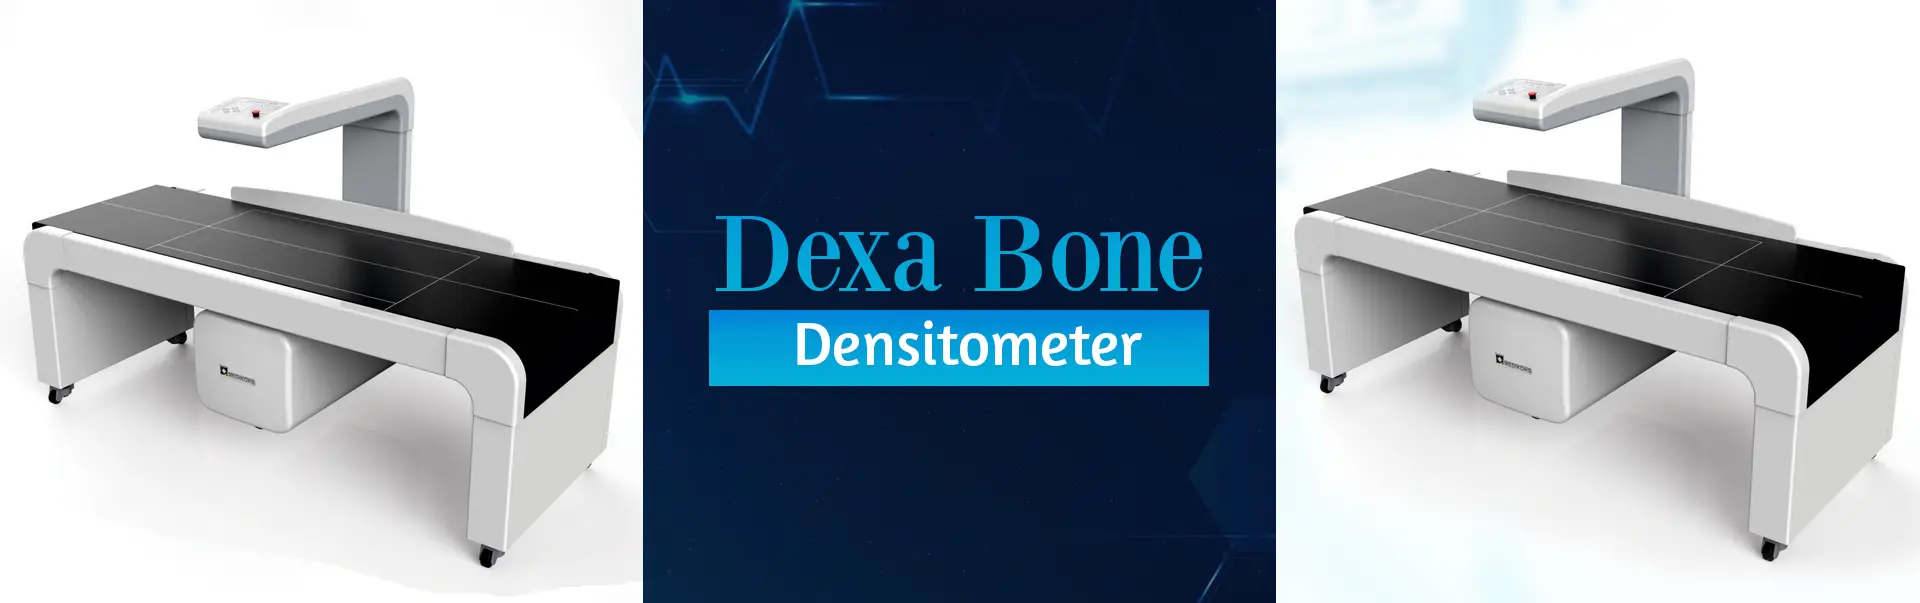 Dexa Bone Densitometer Manufacturers in Satara